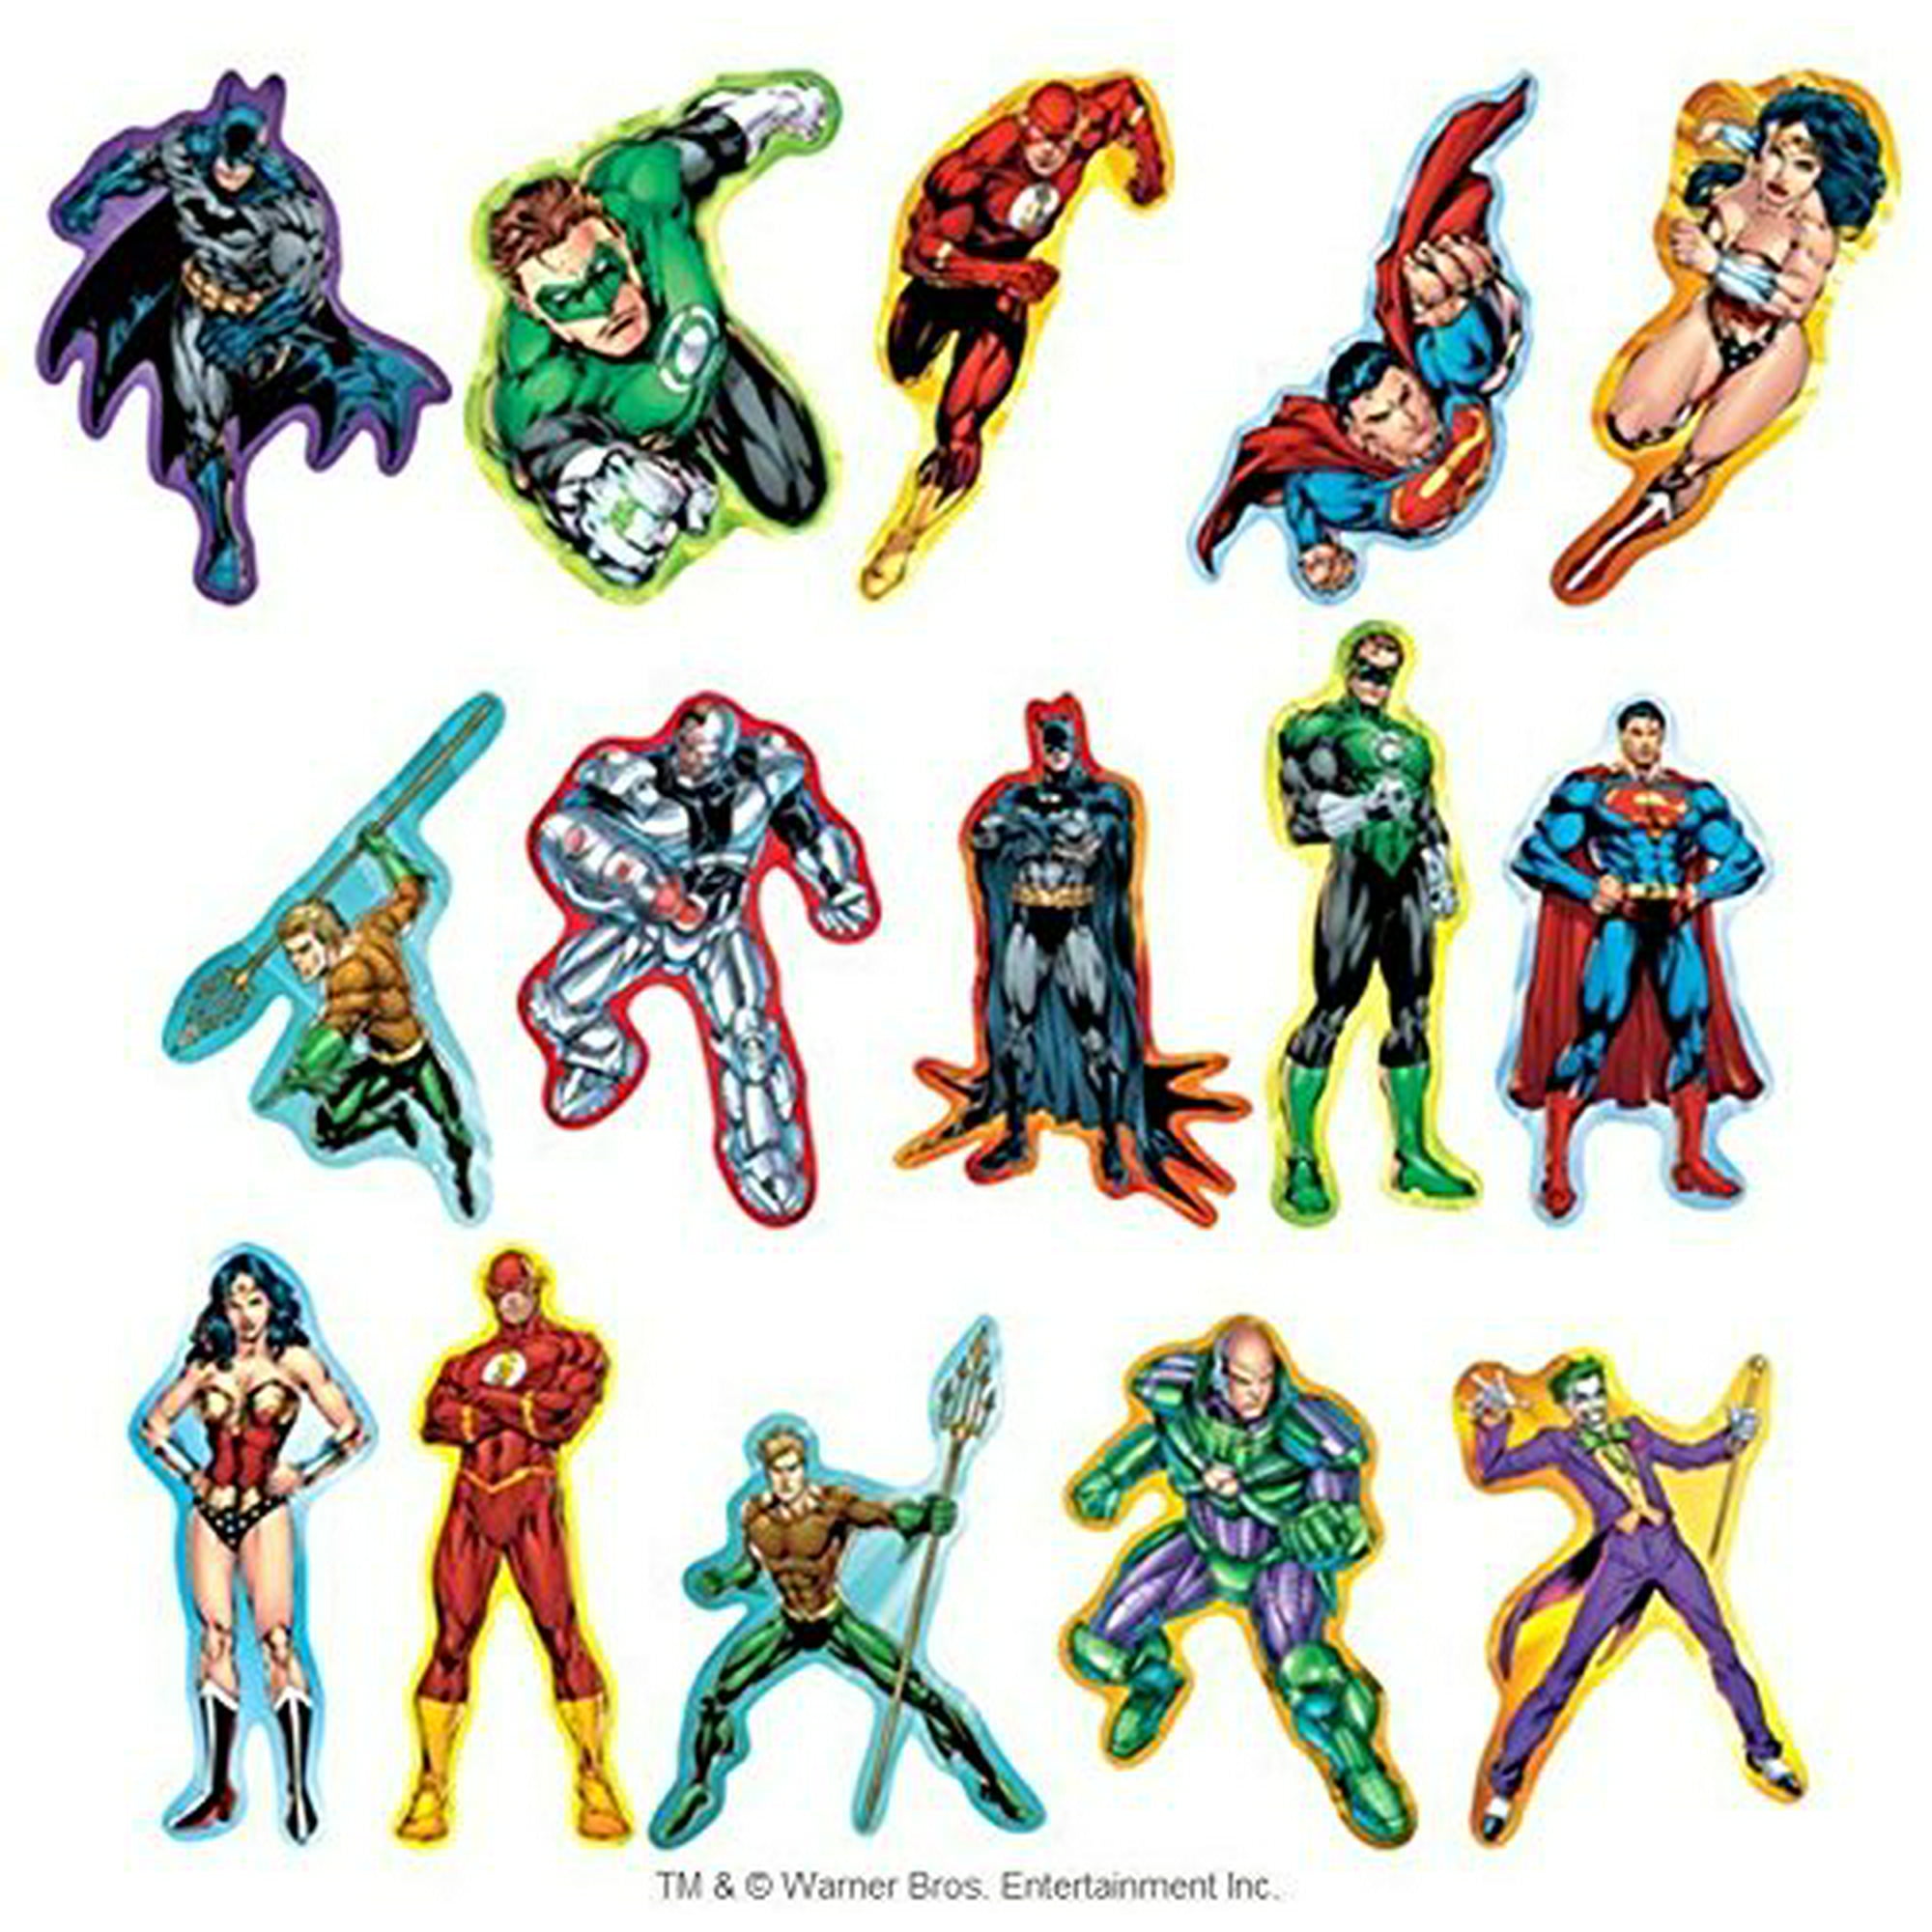 30 DC Comics Justice League Superheroes Stickers 2 Sets of 15 Batman  Superman The Flash Green Lantern Wonder Woman Aquaman Lex Luthor Cyborg The  Joker Sticker Set | Walmart Canada